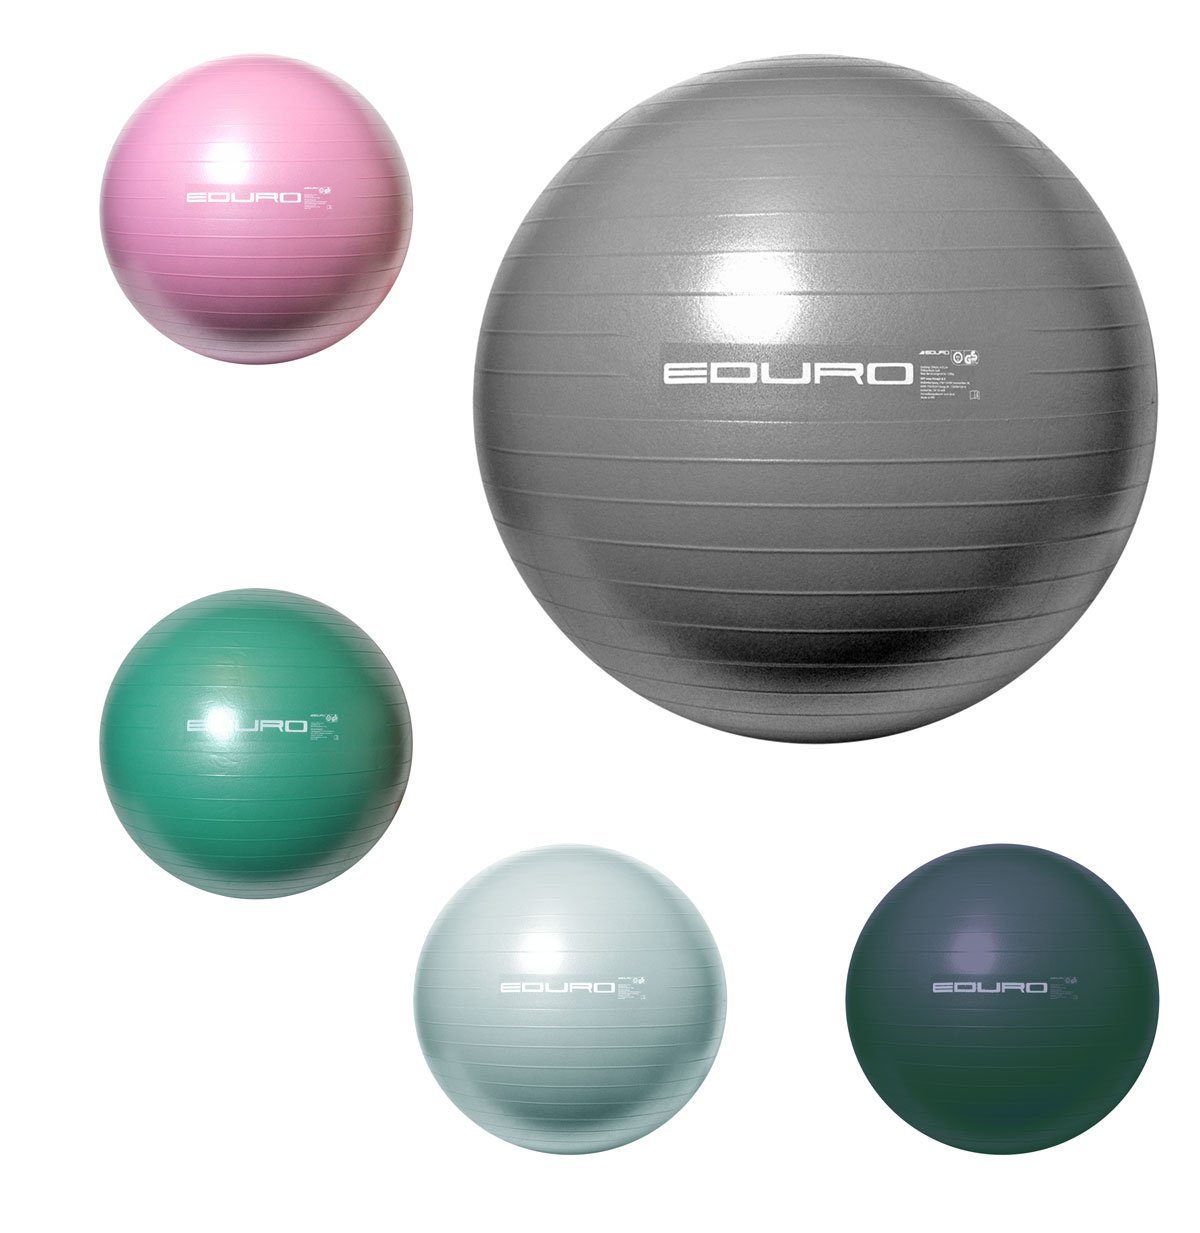 Miweba Sports 4in1-Gymnastikball-Set, Sitzball, 65 cm, Ballschale